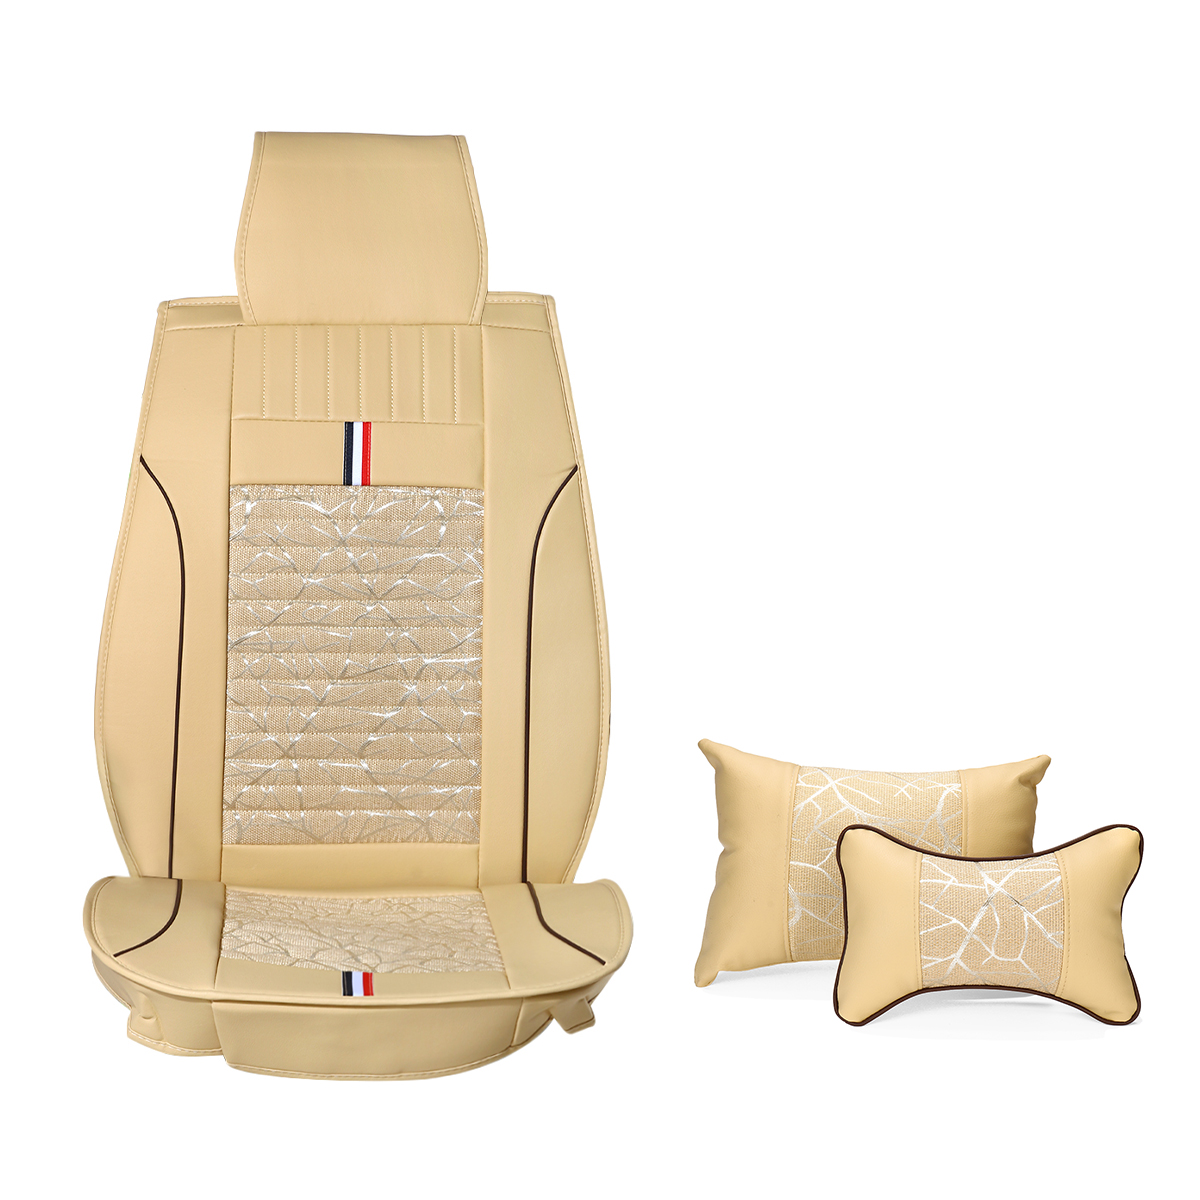 Luxury Universal Full Car Seat Cover Headrest Auto Cushion Pad Mat & 2x Pillows